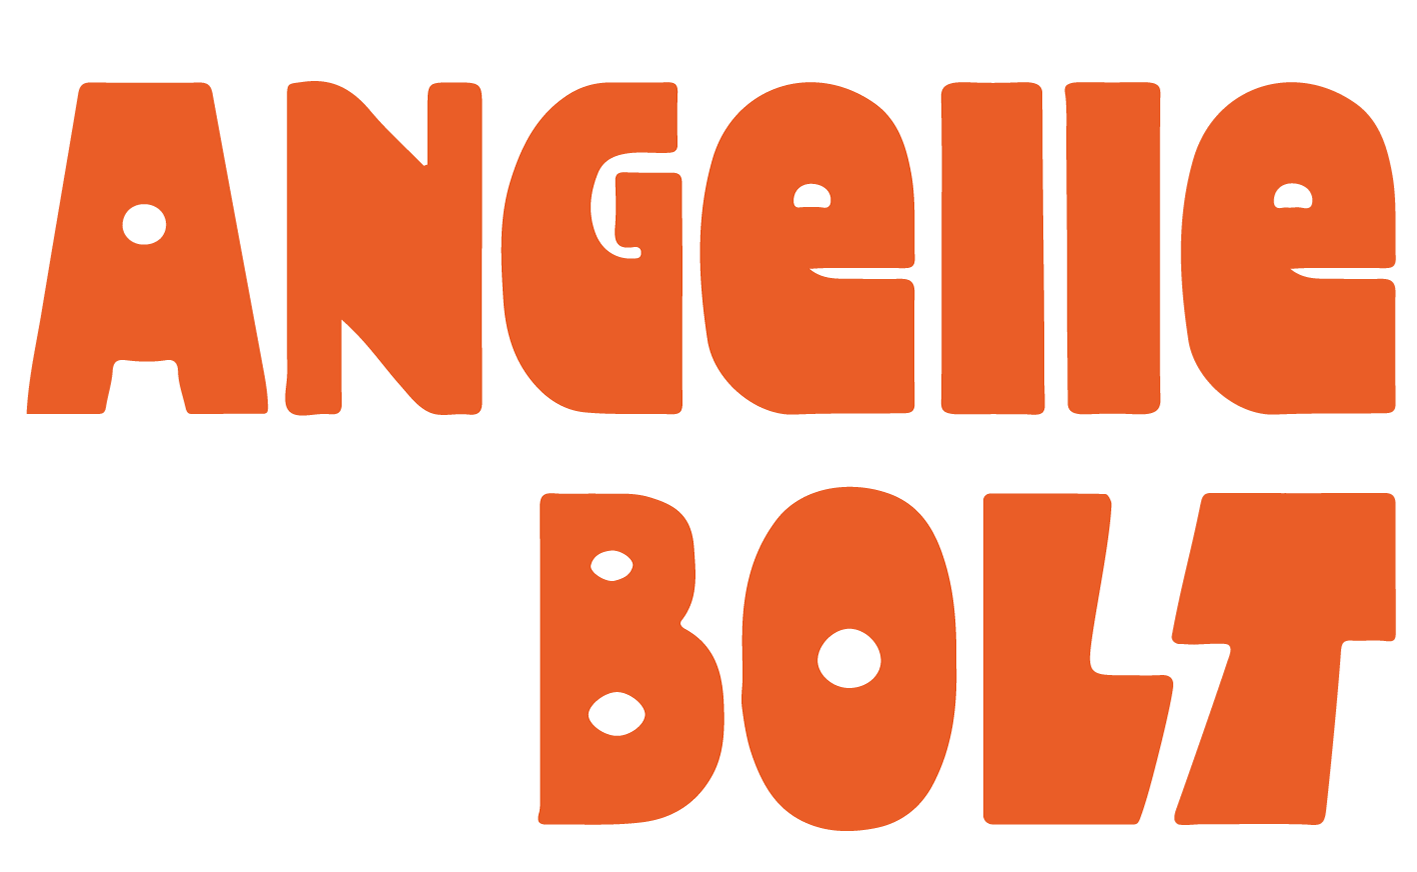 Angelle Bolt